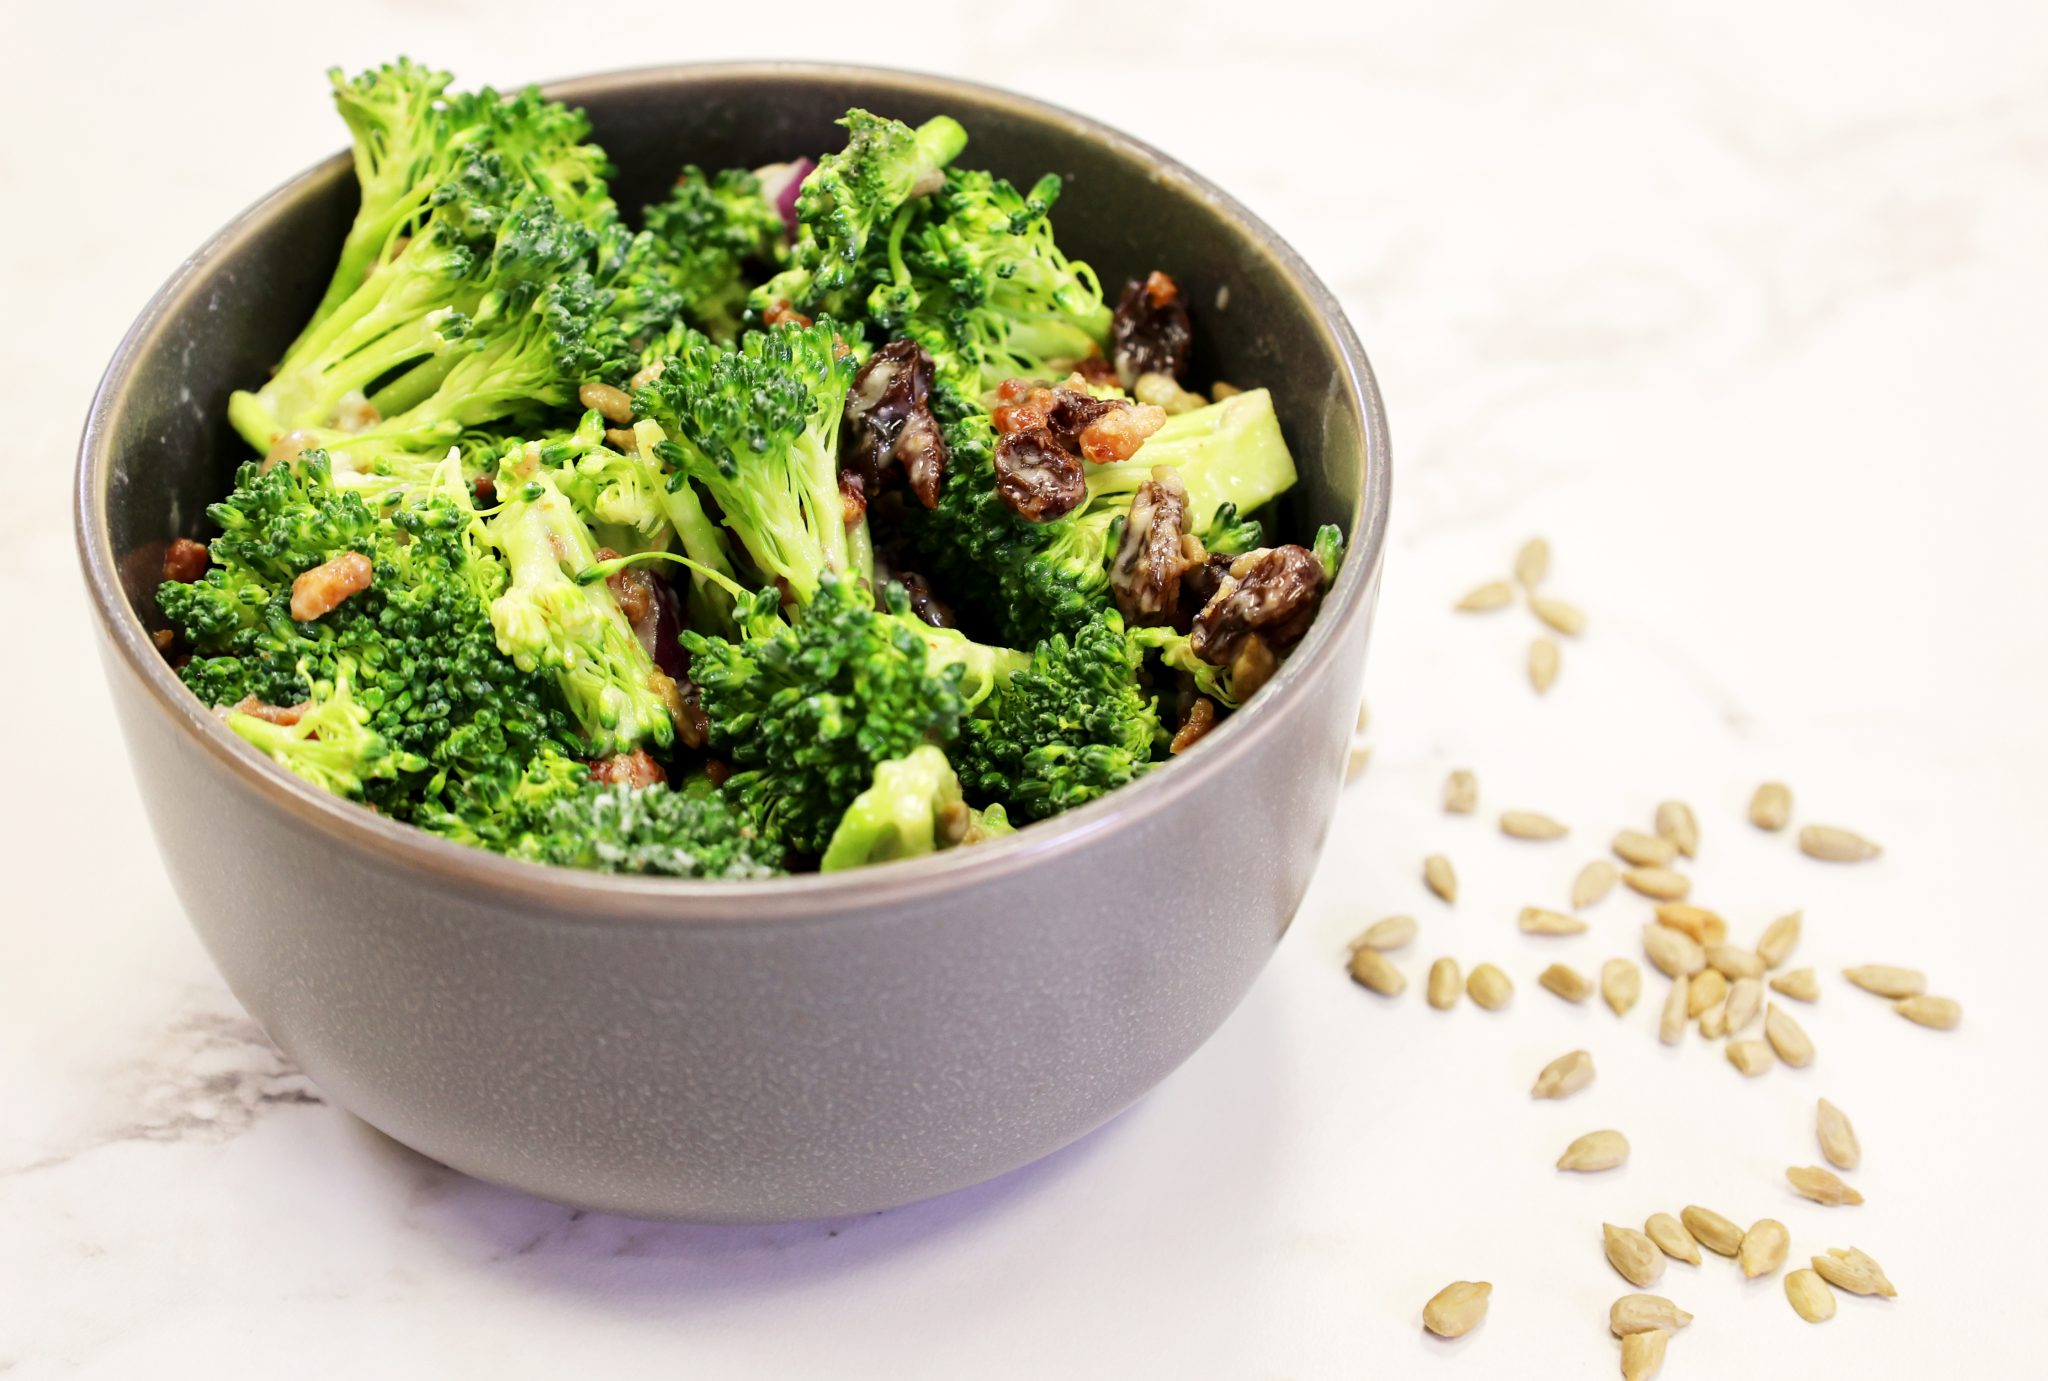 Green Broccoli in grey bowl